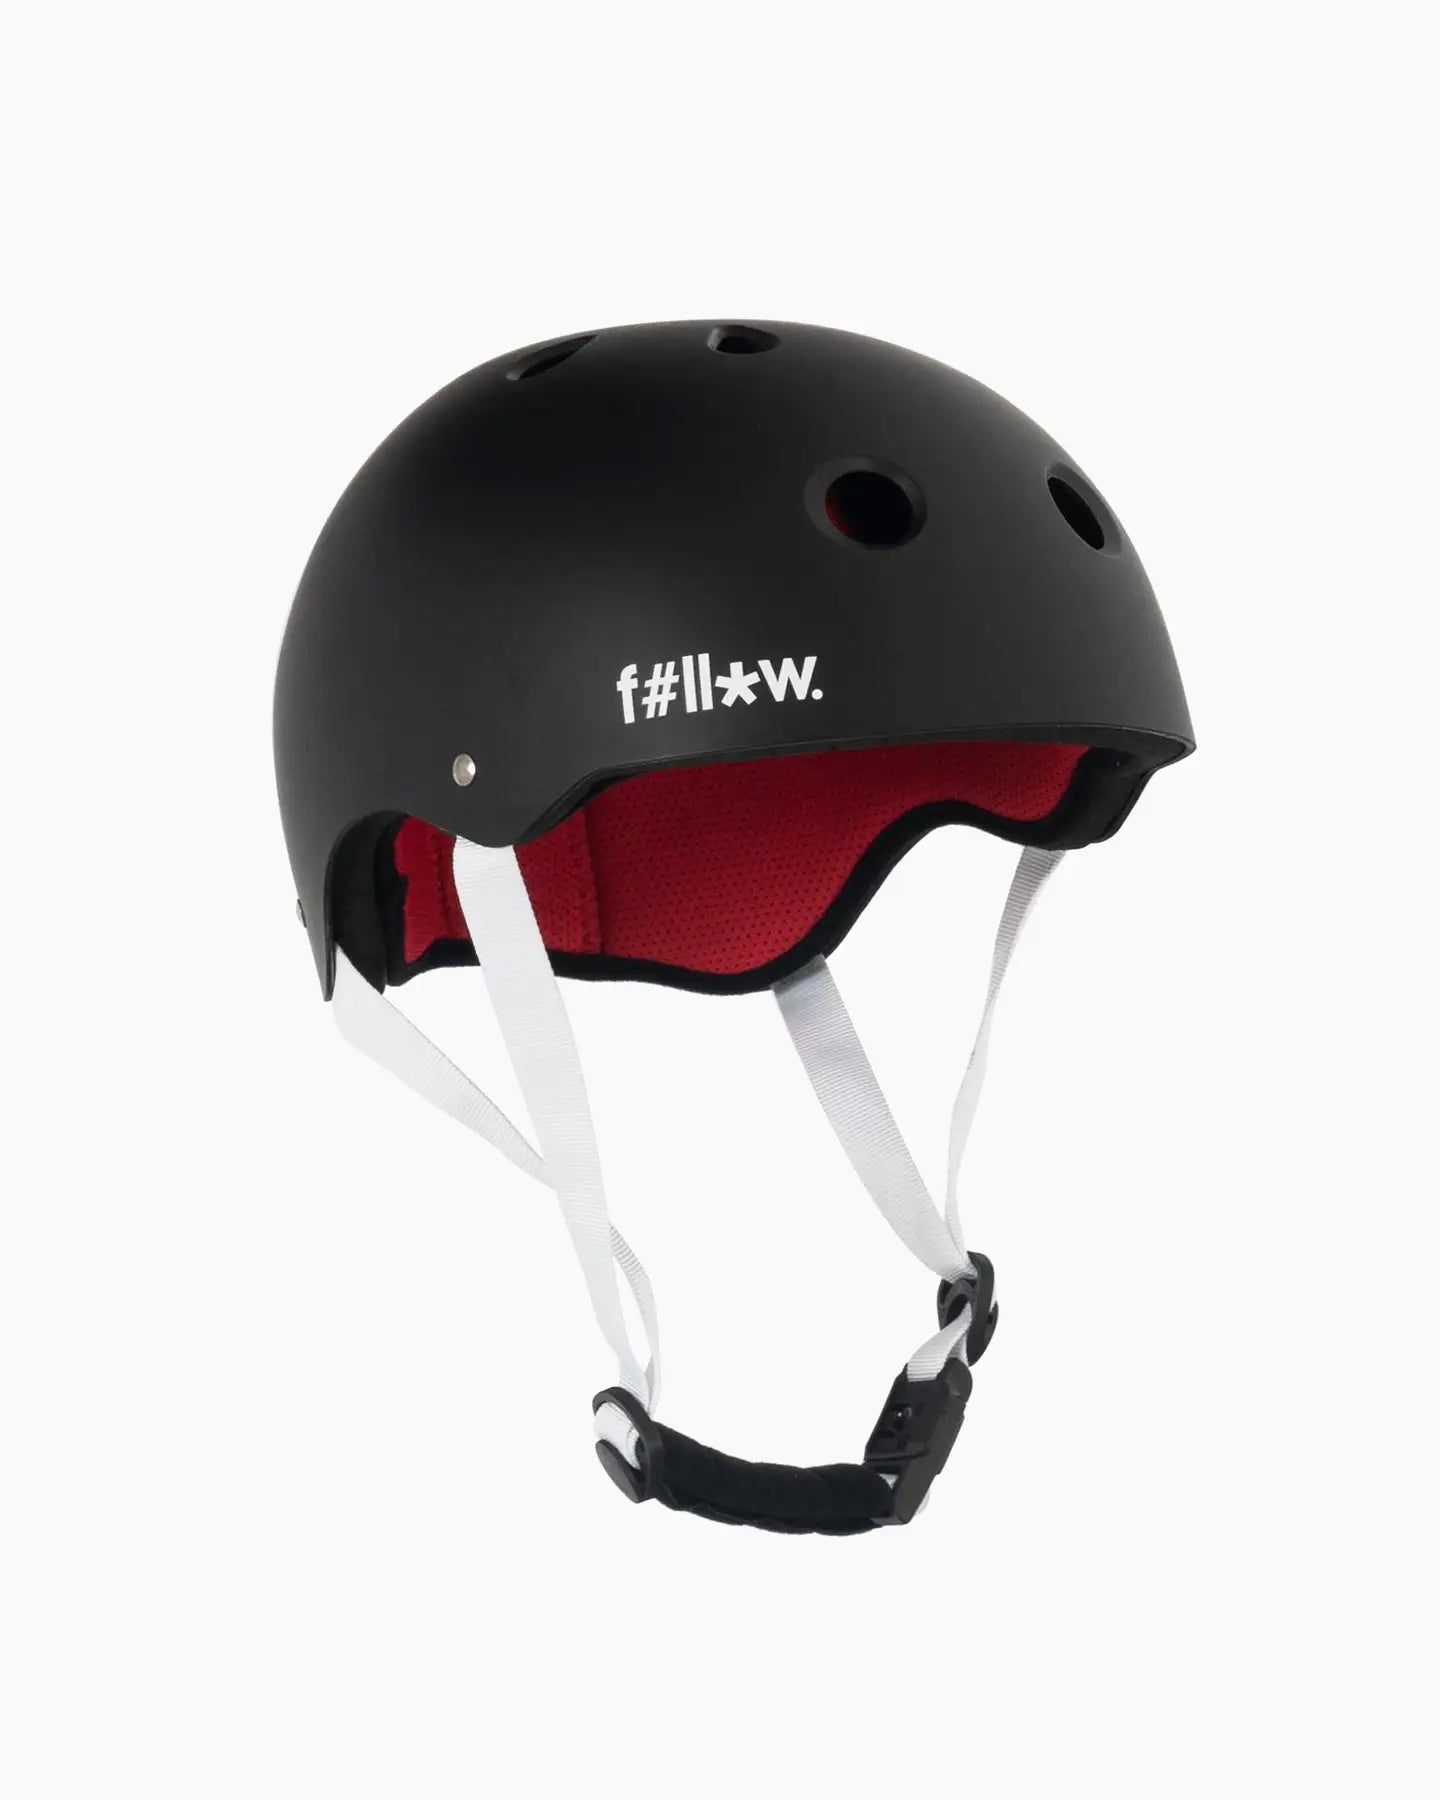 Follow Pro Helmet - Black/Red front